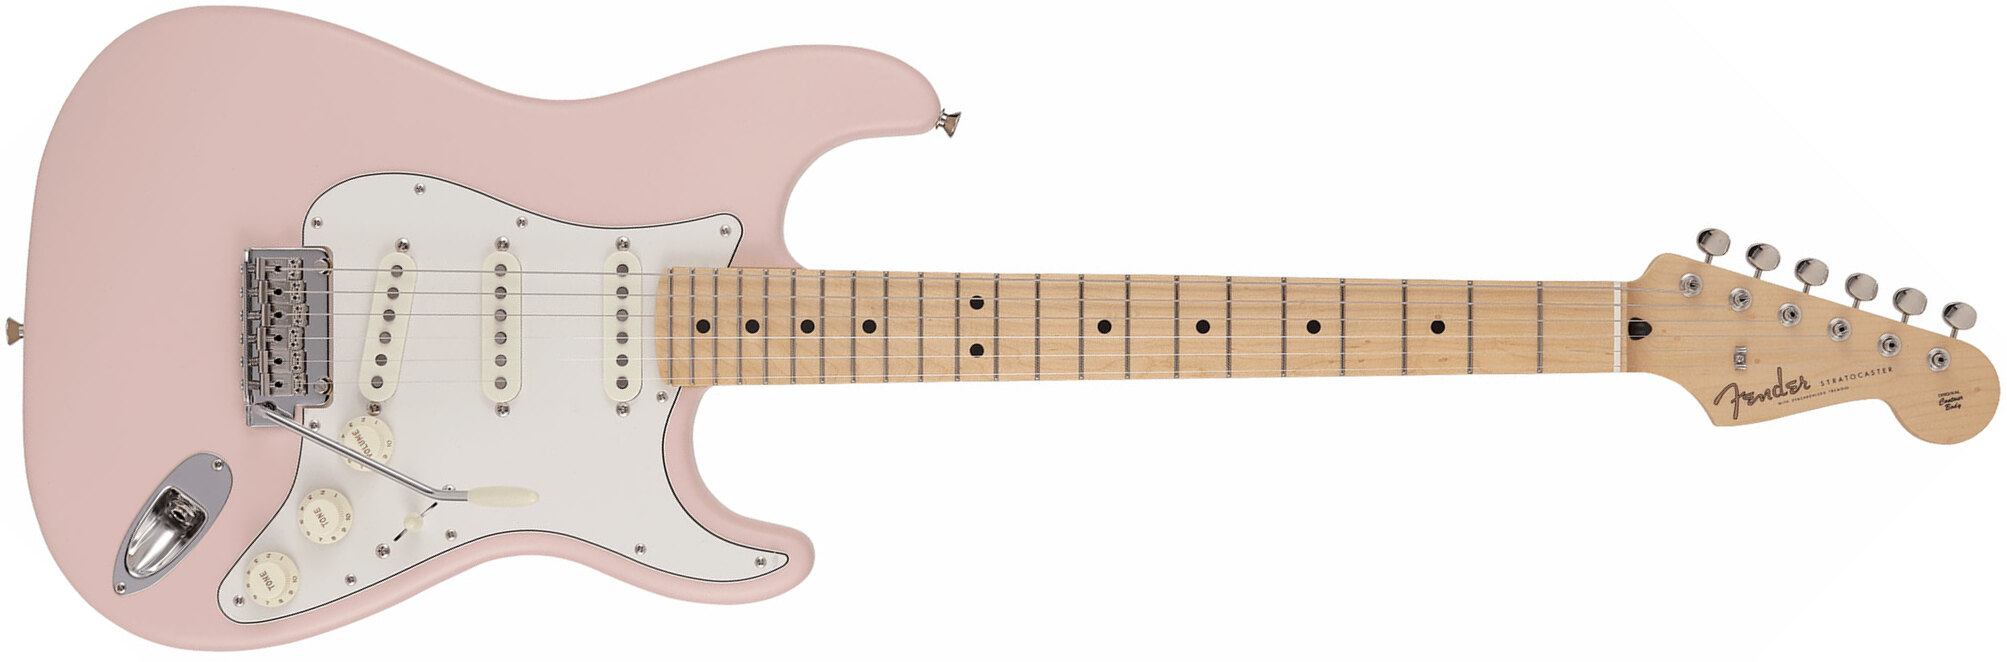 Fender Strat Junior Mij Jap 3s Trem Rw - Satin Shell Pink - Electric guitar for kids - Main picture